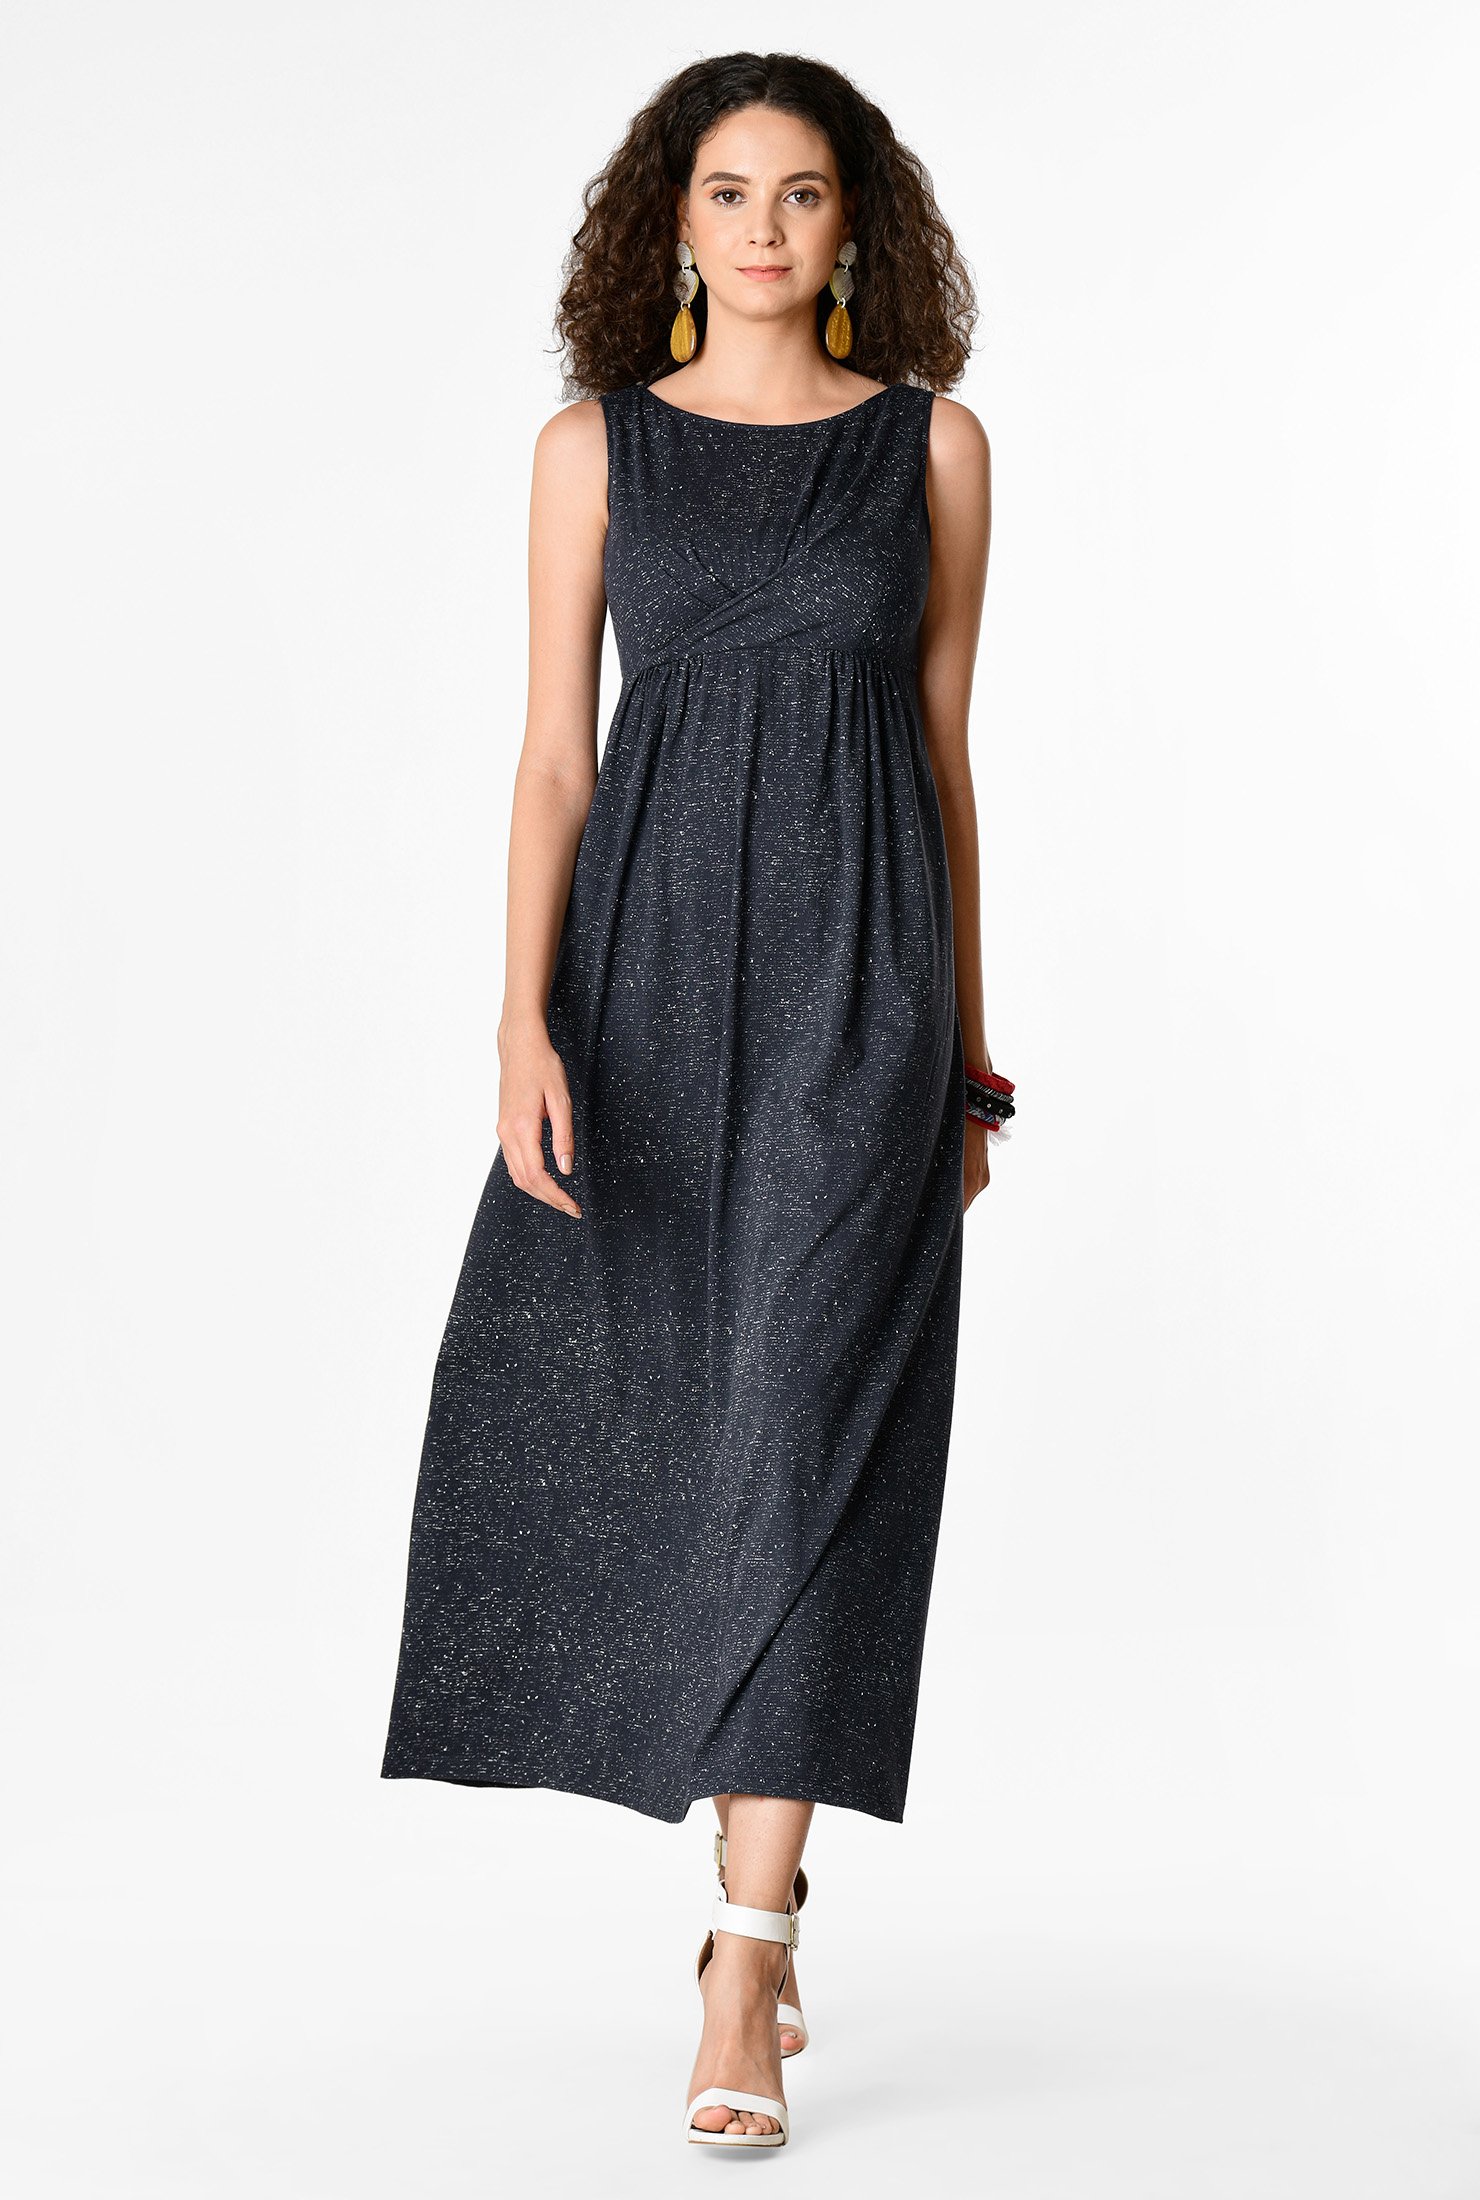 Shop Graphic print cotton knit empire dress | eShakti